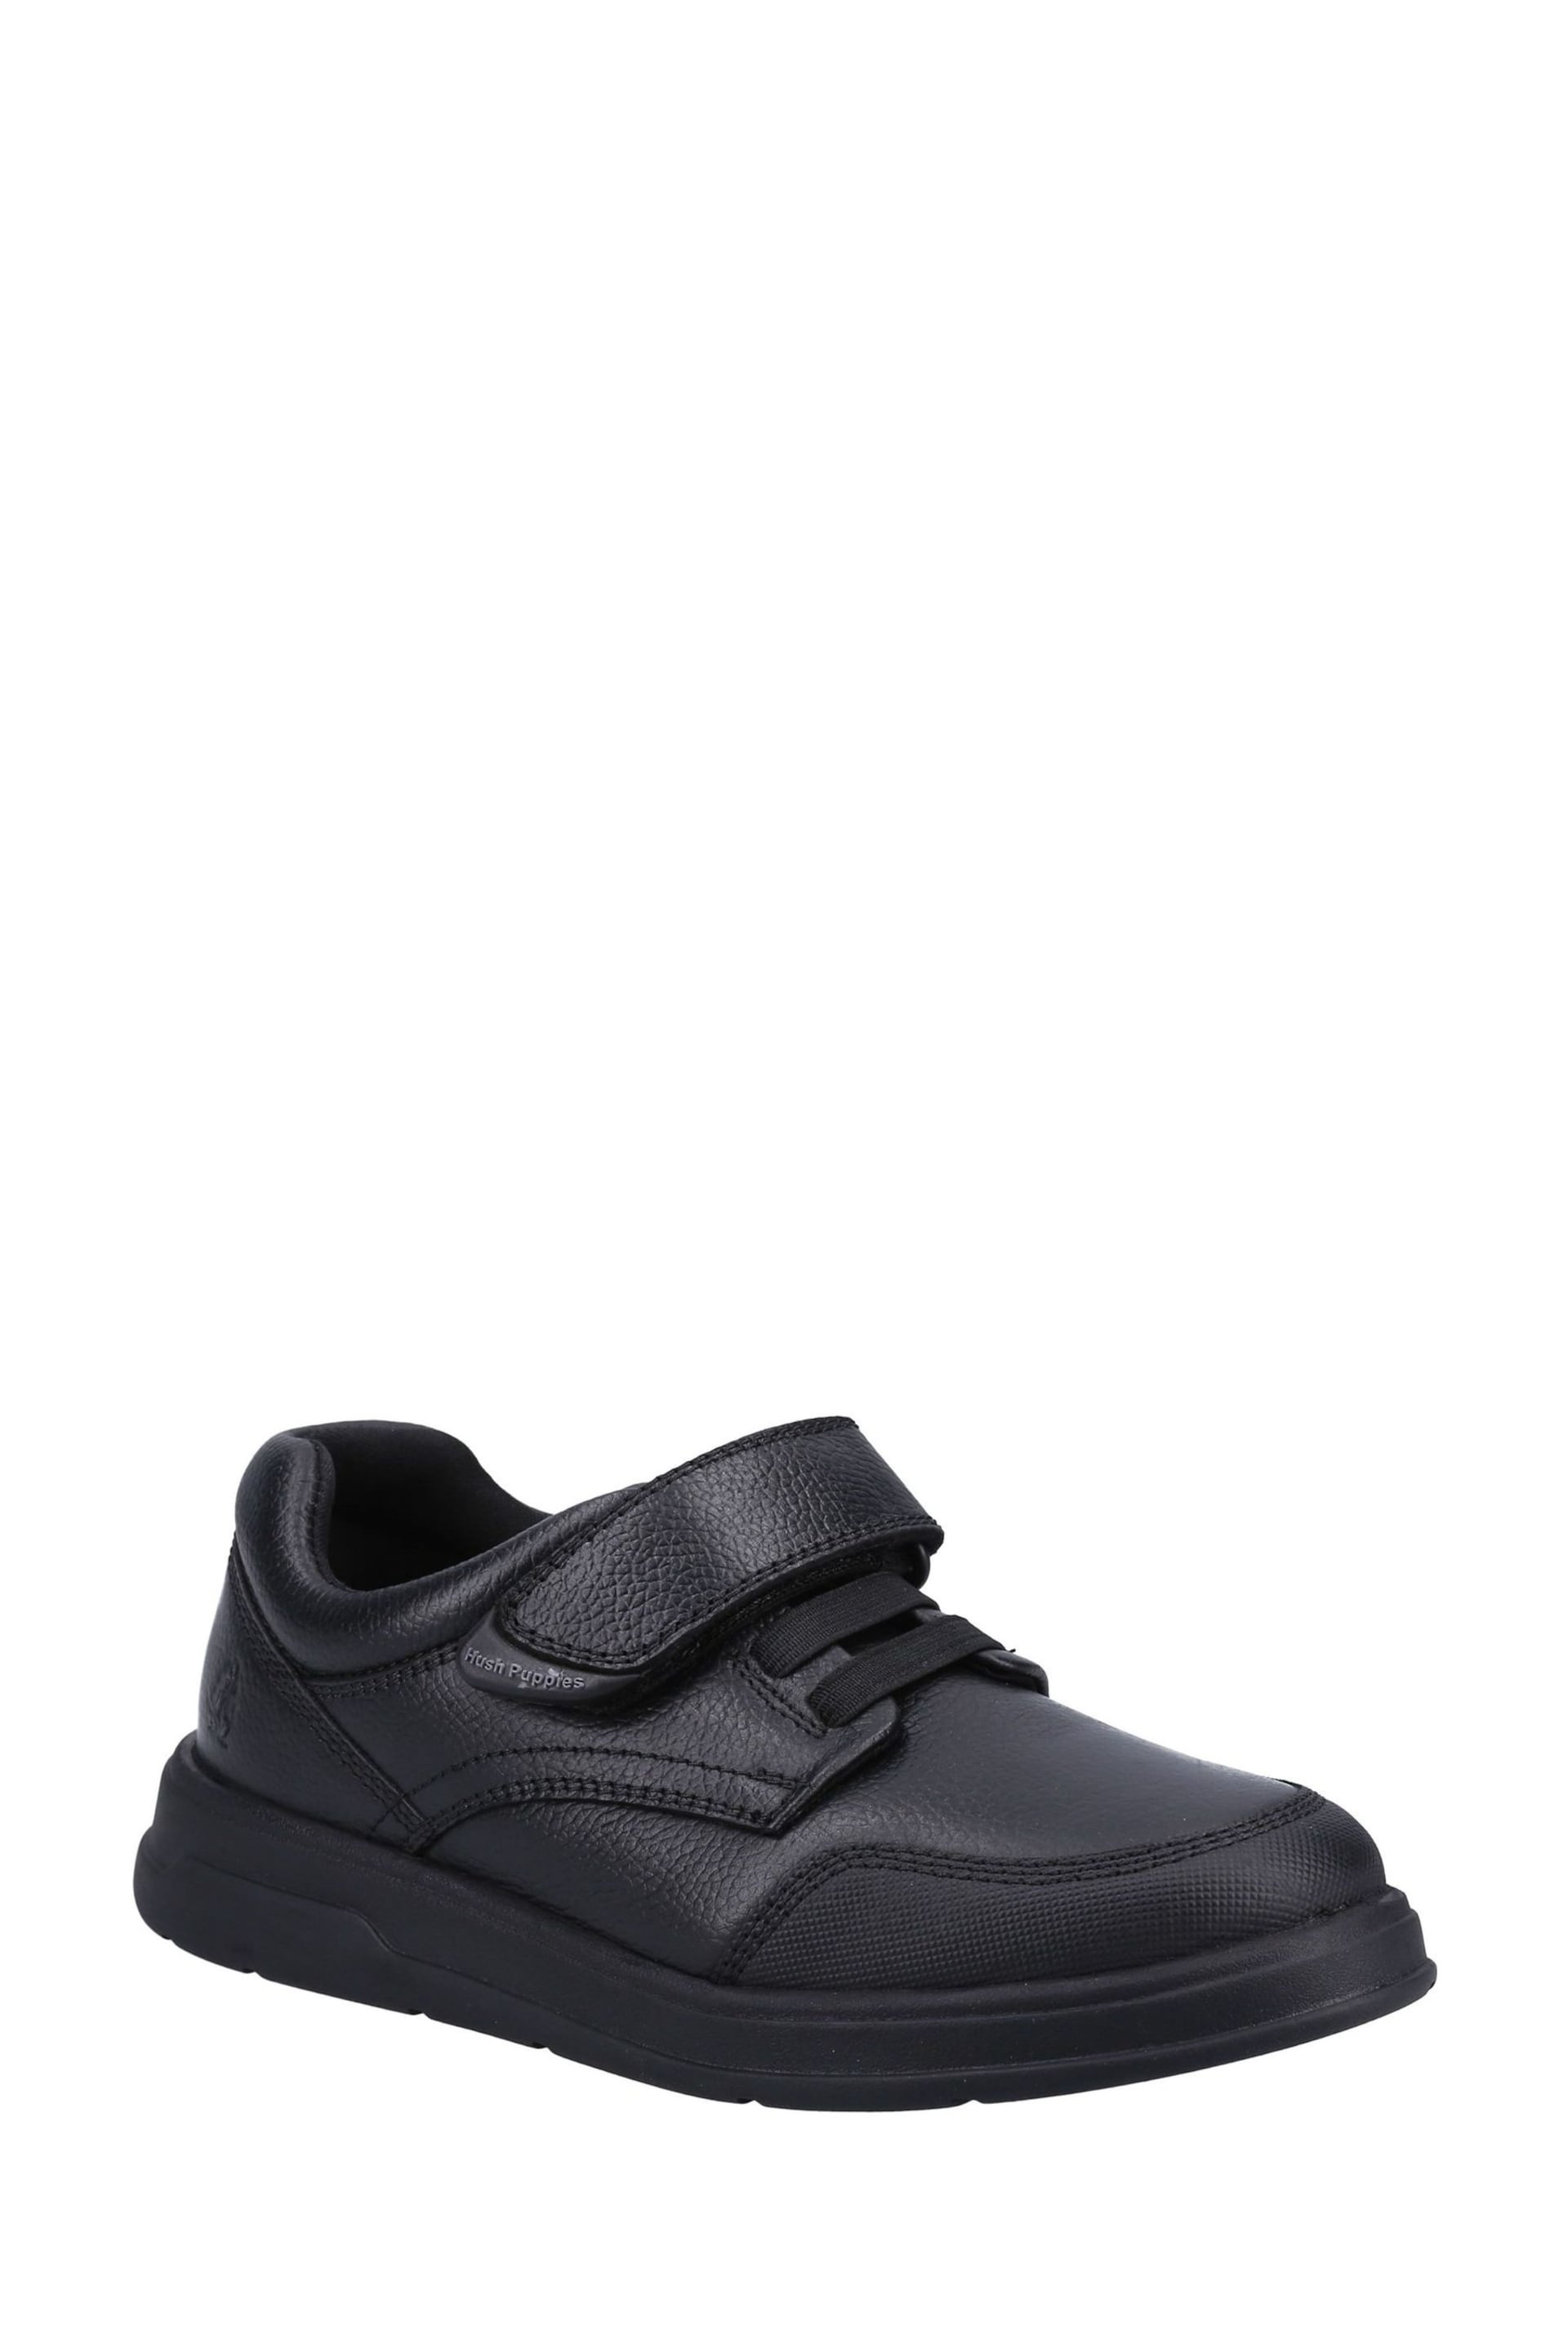 Hush Puppies Rowan Junior Black Shoes - Image 2 of 4